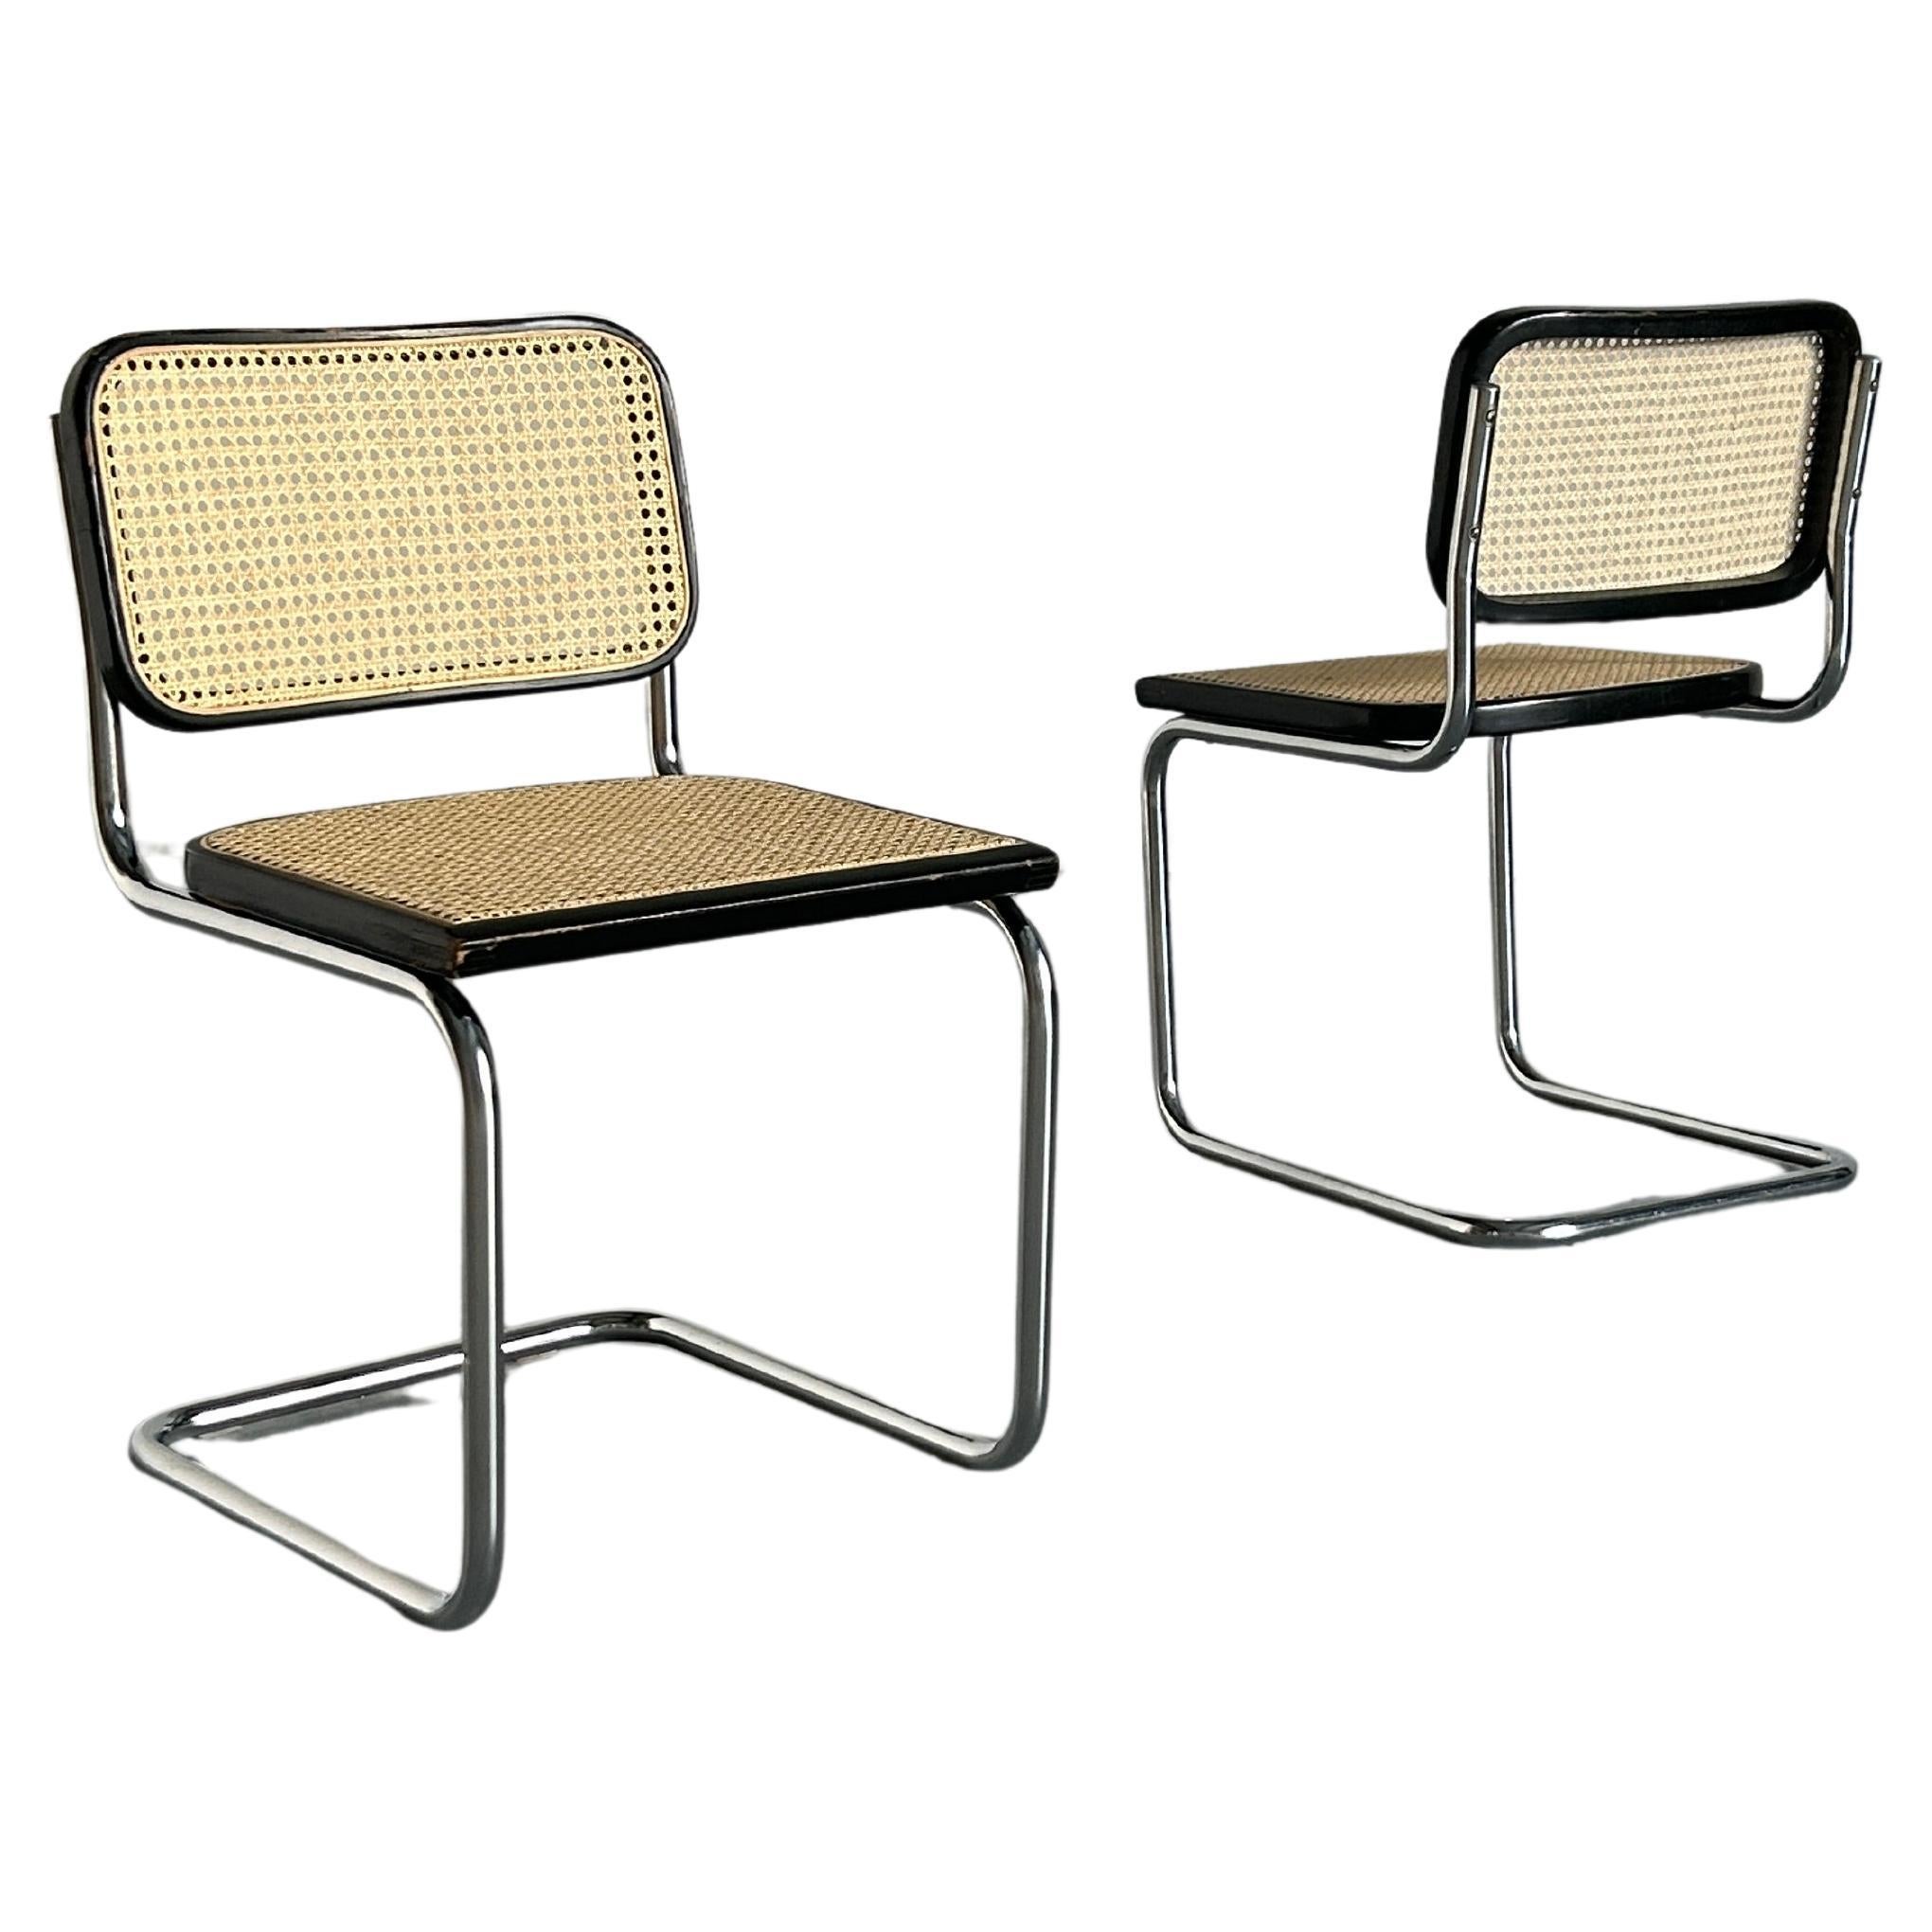 Pair of Vintage Cesca Mid Century Italian Cantilever Chairs, Thonet Mundus